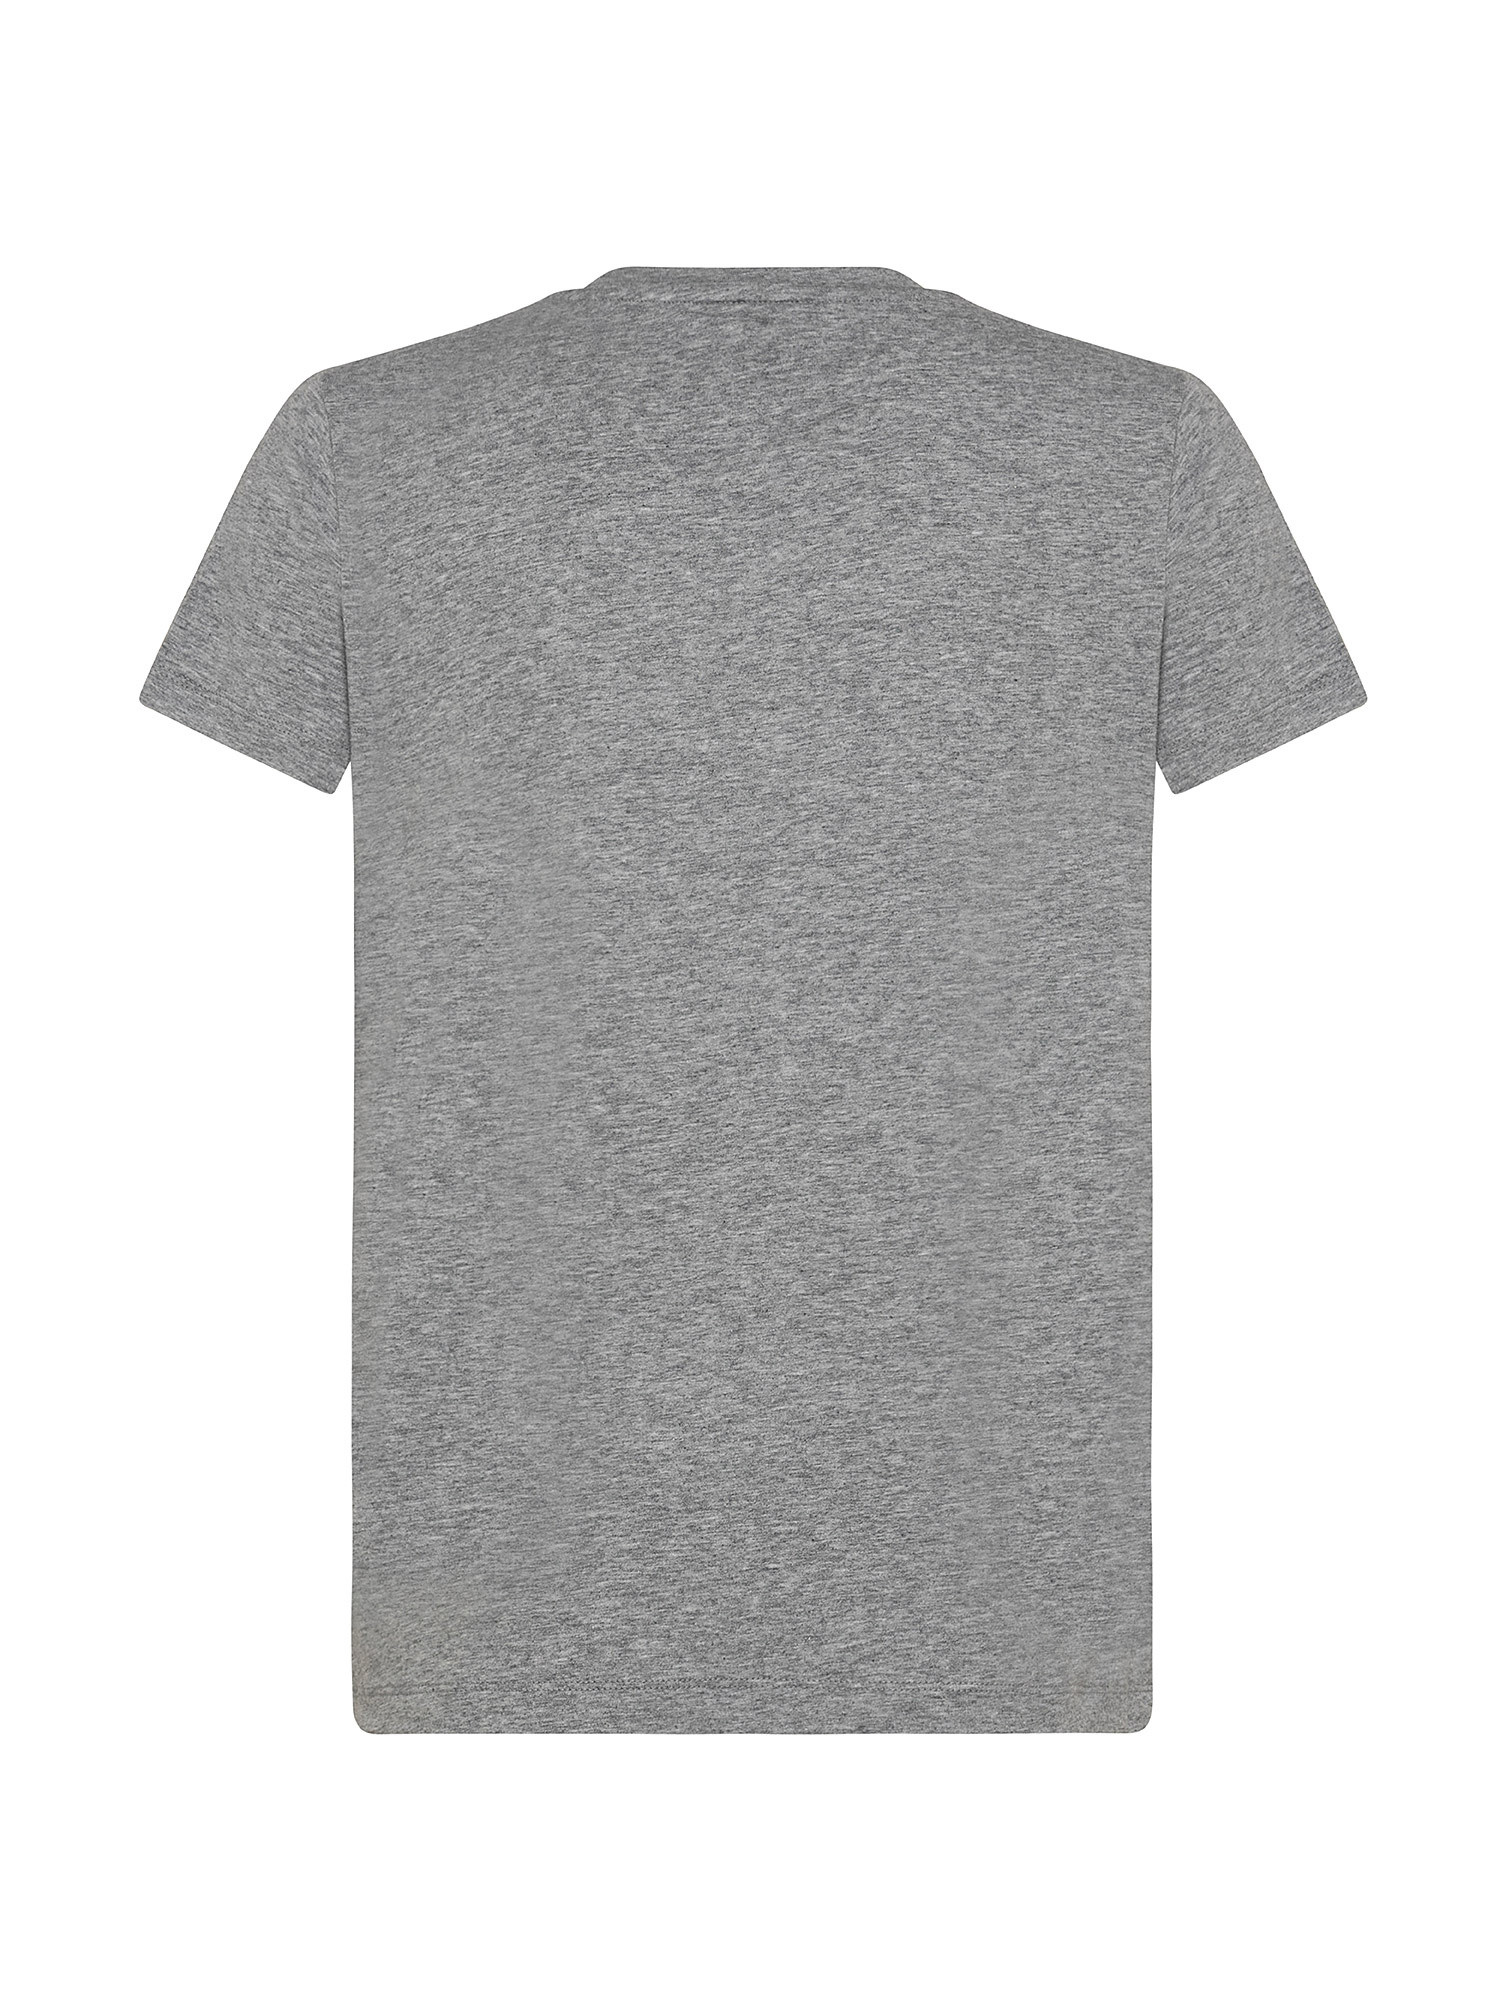 Studded logo T-shirt, Grey, large image number 1